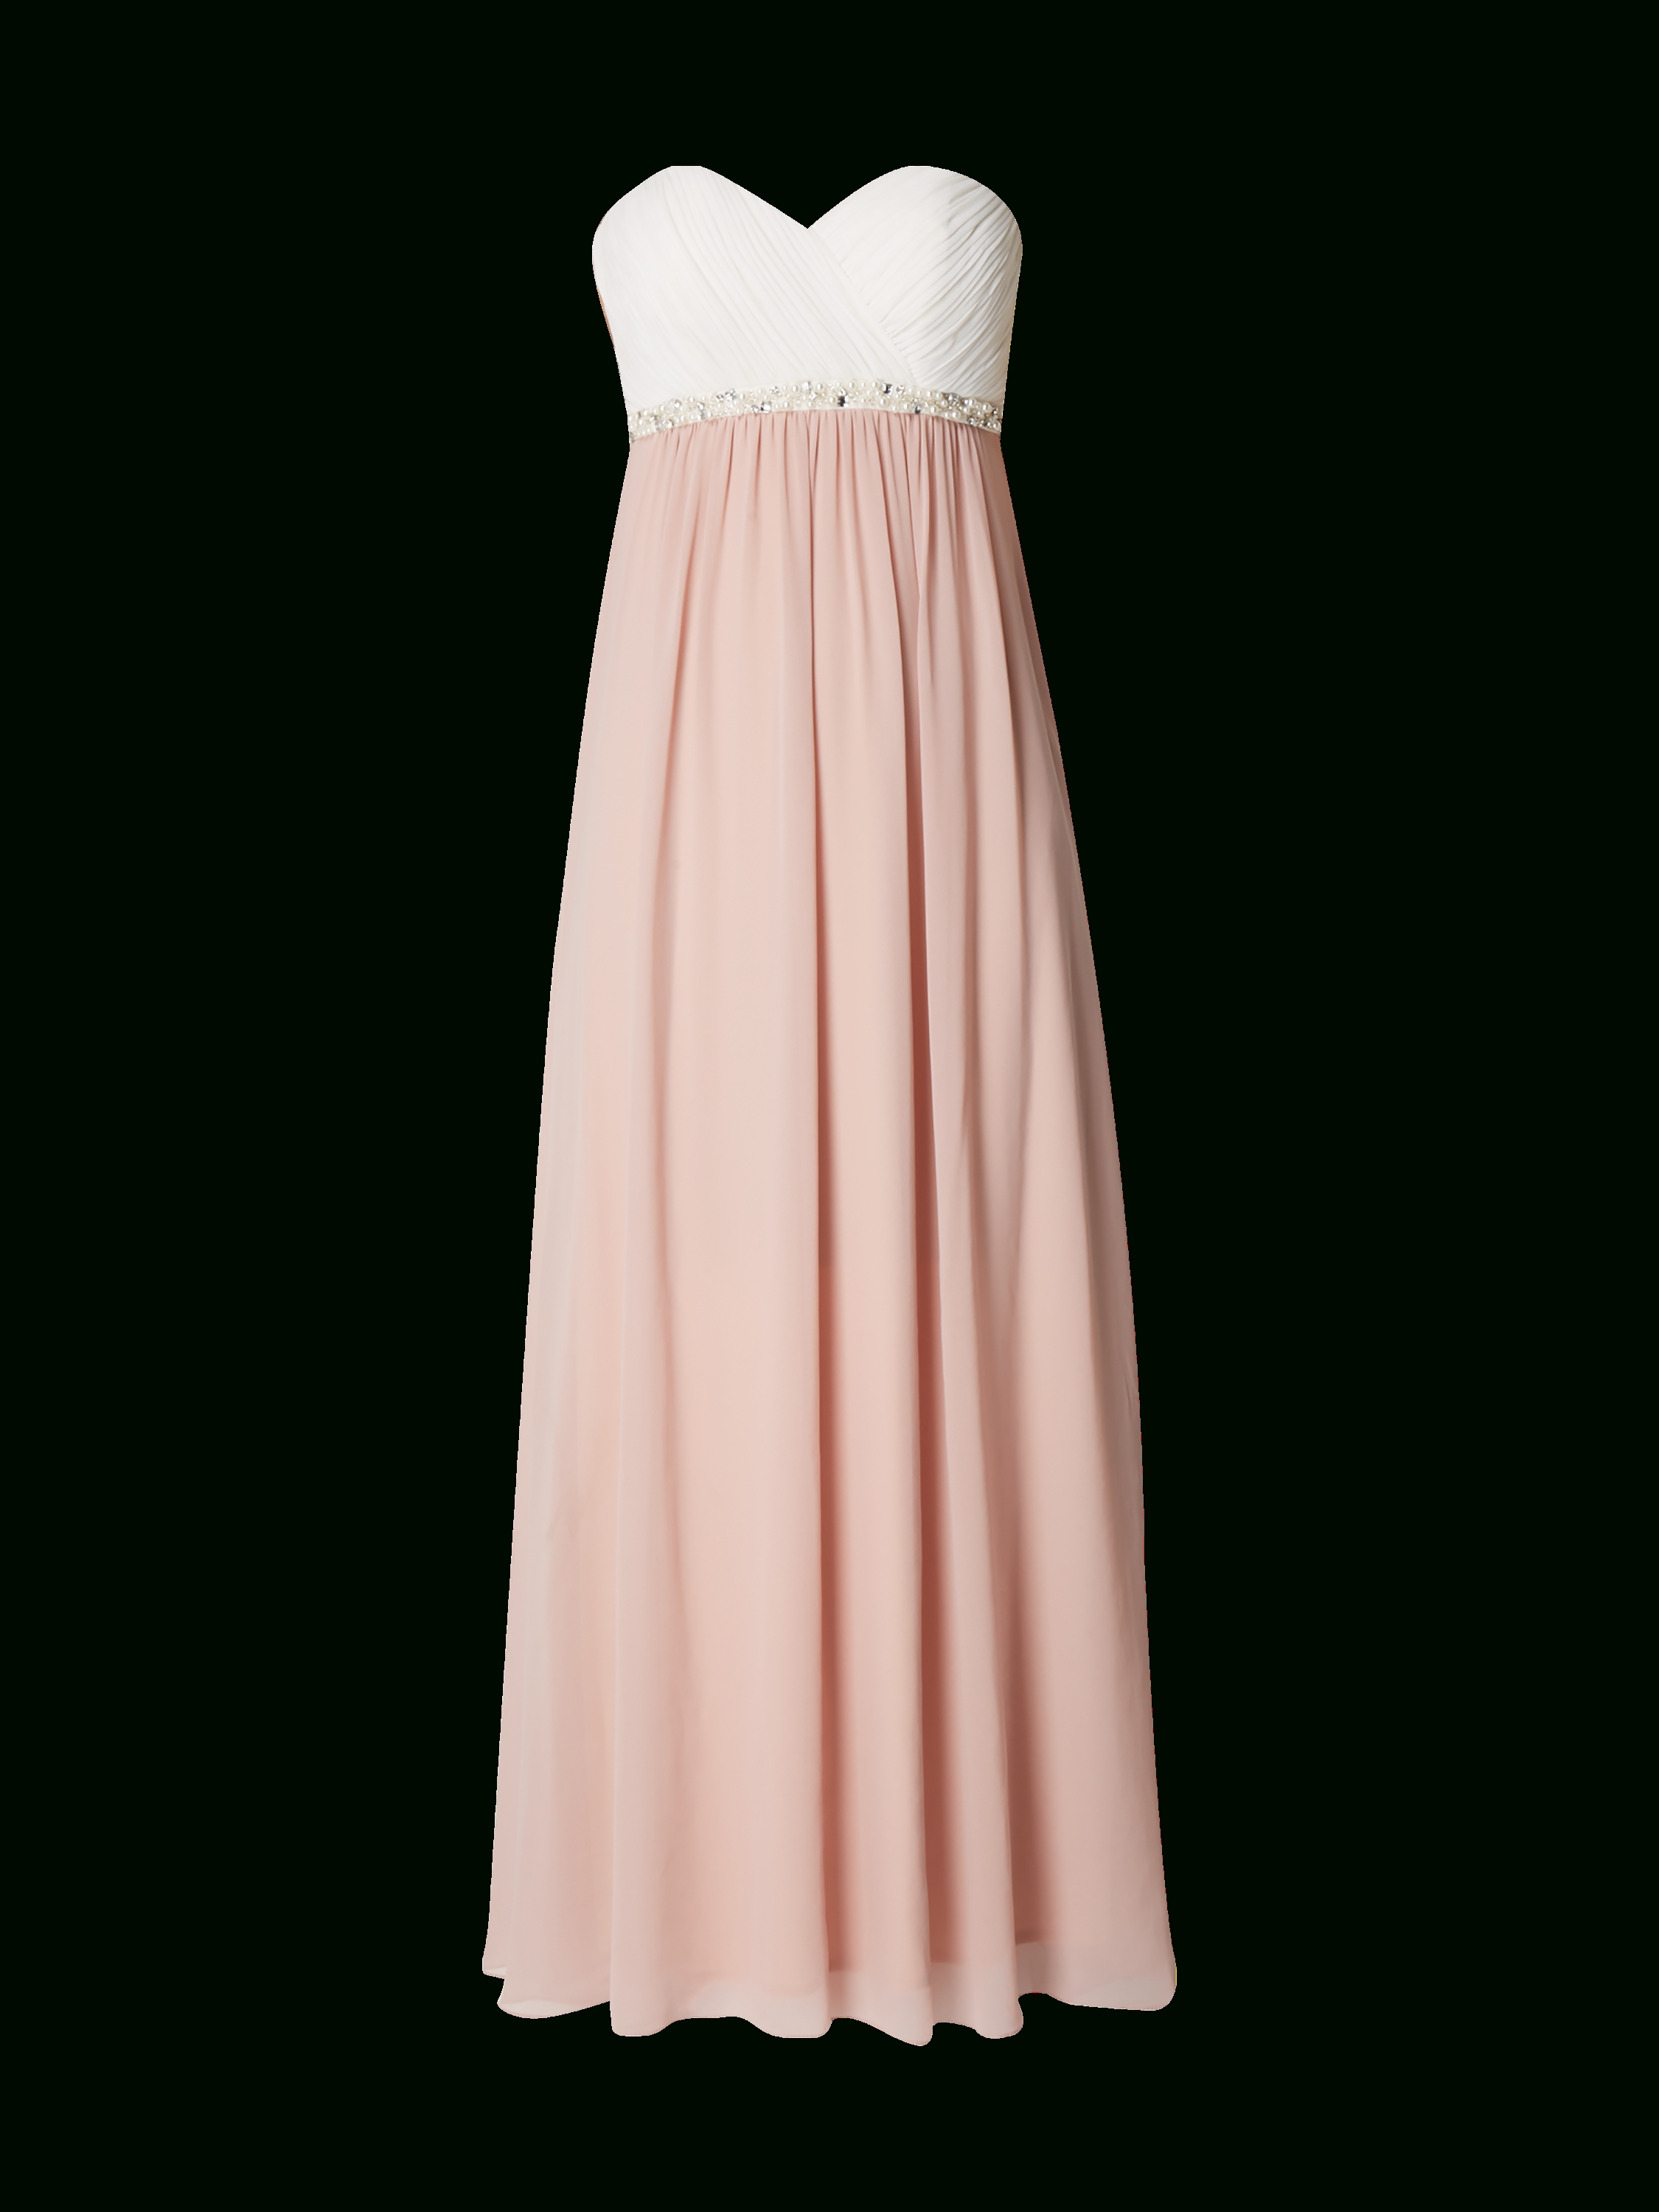 20 Cool Kleid Altrosa Lang Design Fantastisch Kleid Altrosa Lang Spezialgebiet